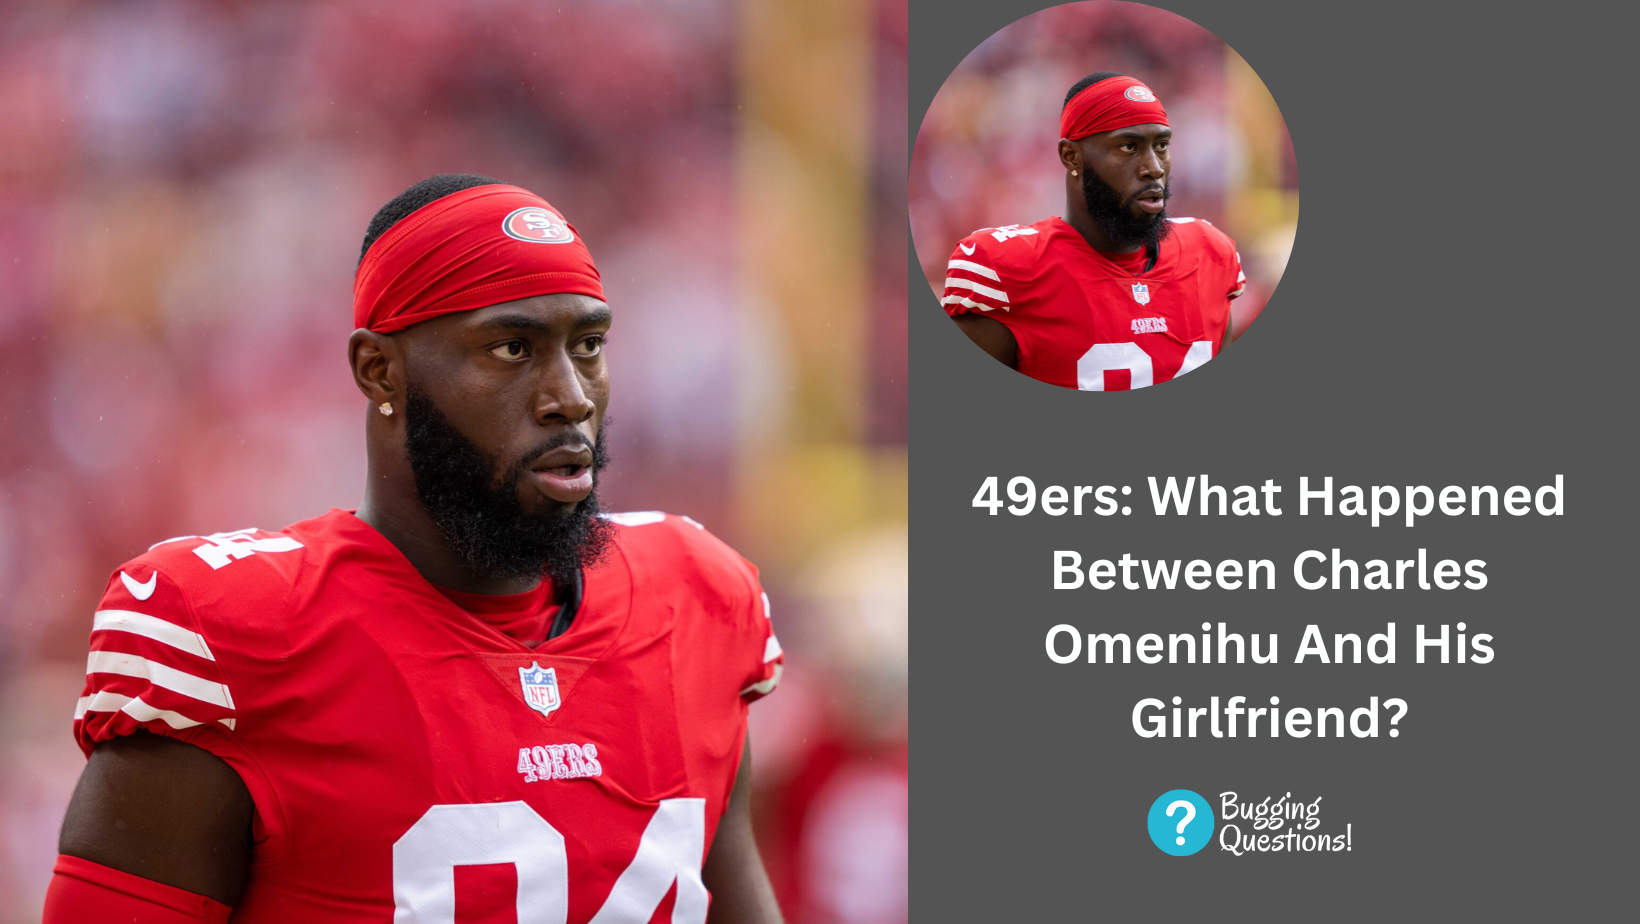 49ers: What Happened Between Charles Omenihu And His Girlfriend?